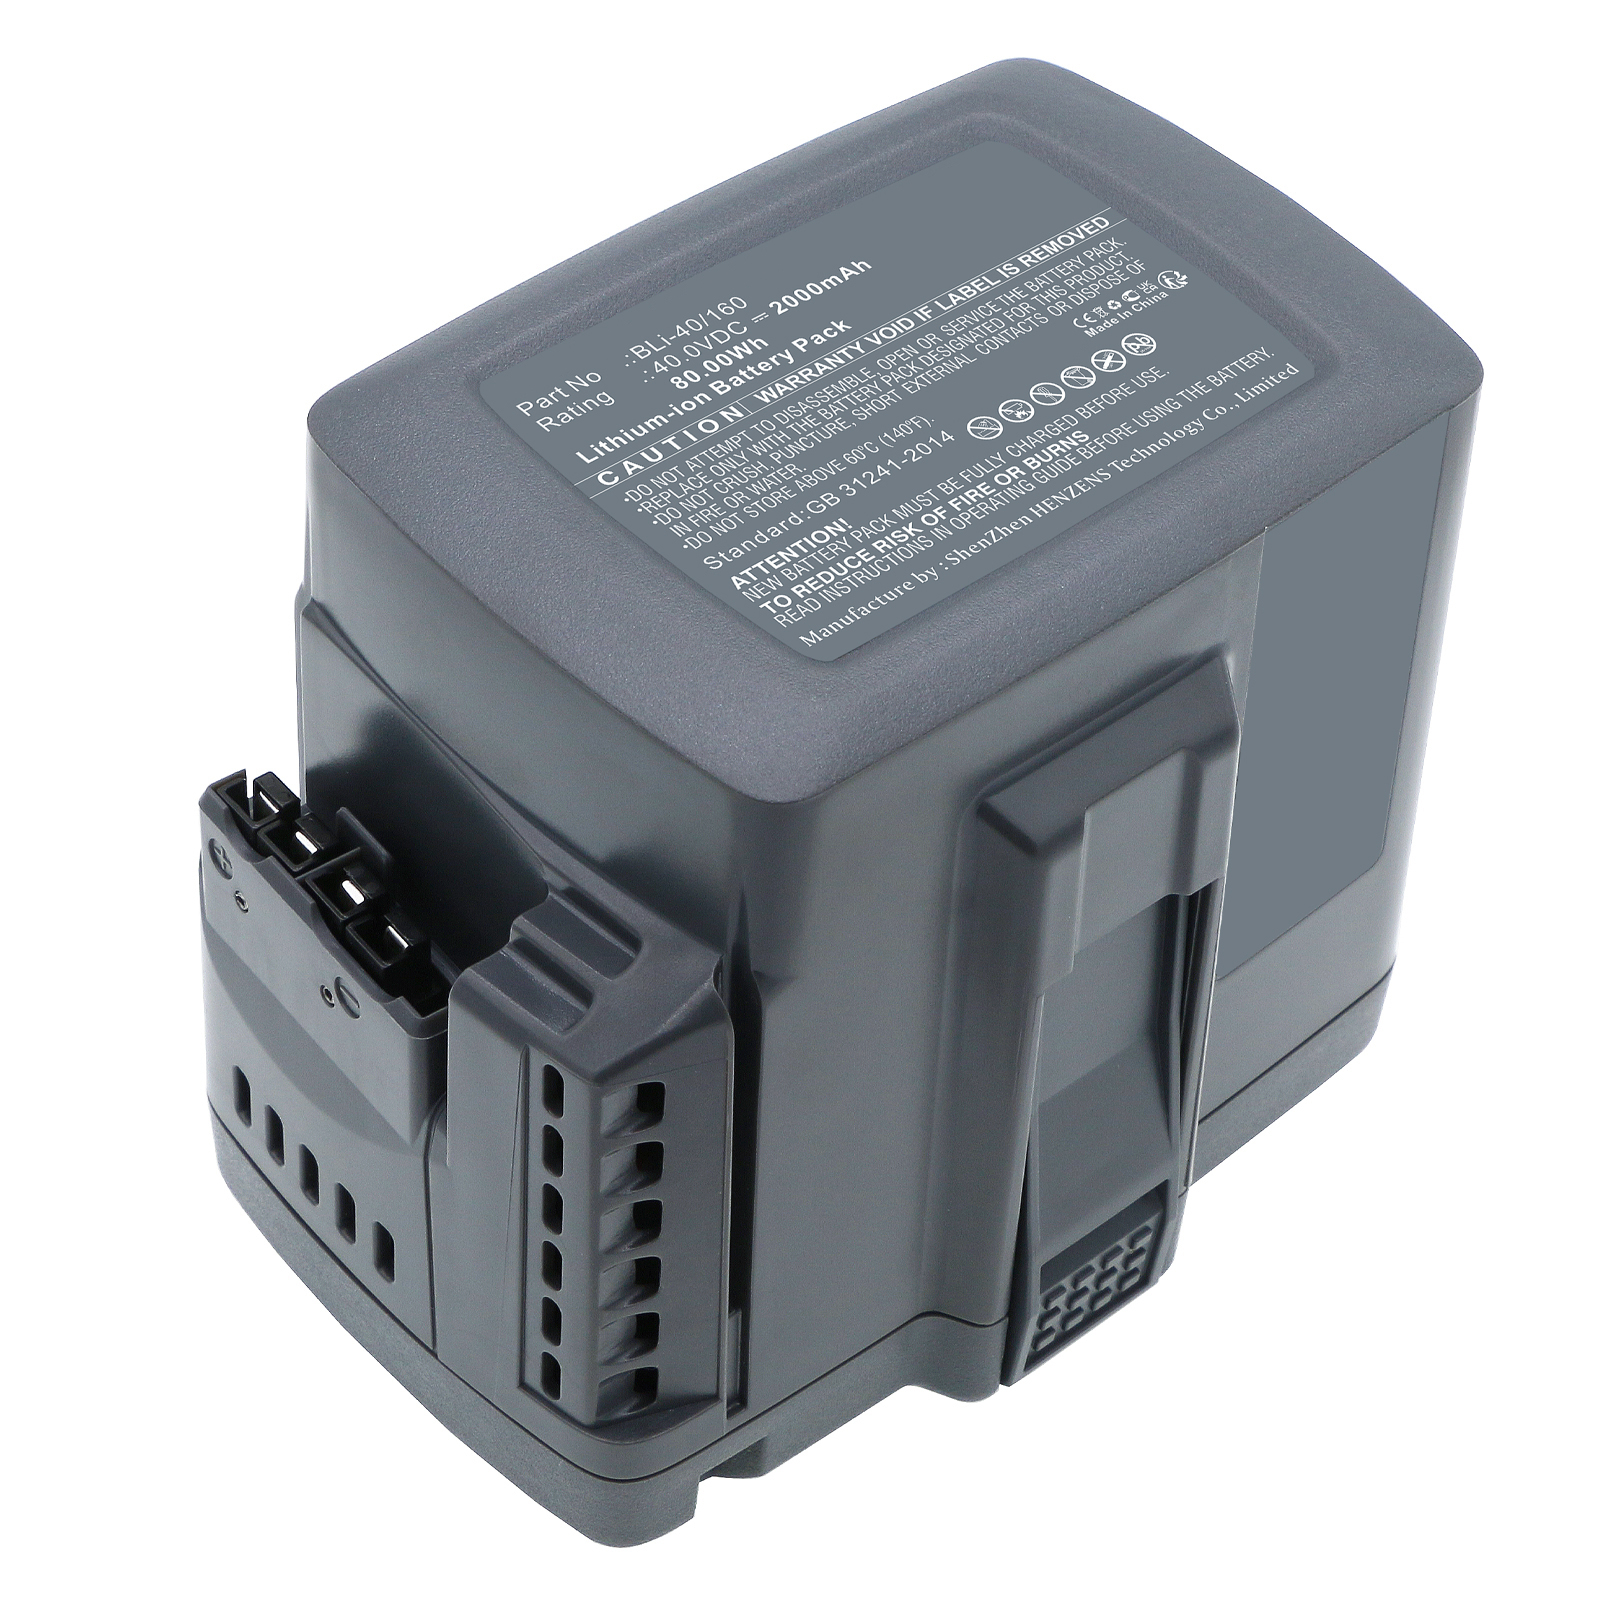 Synergy Digital Lawn Mower Battery, Compatible with Gardena 28311 Lawn Mower Battery (Li-ion, 40V, 2000mAh)